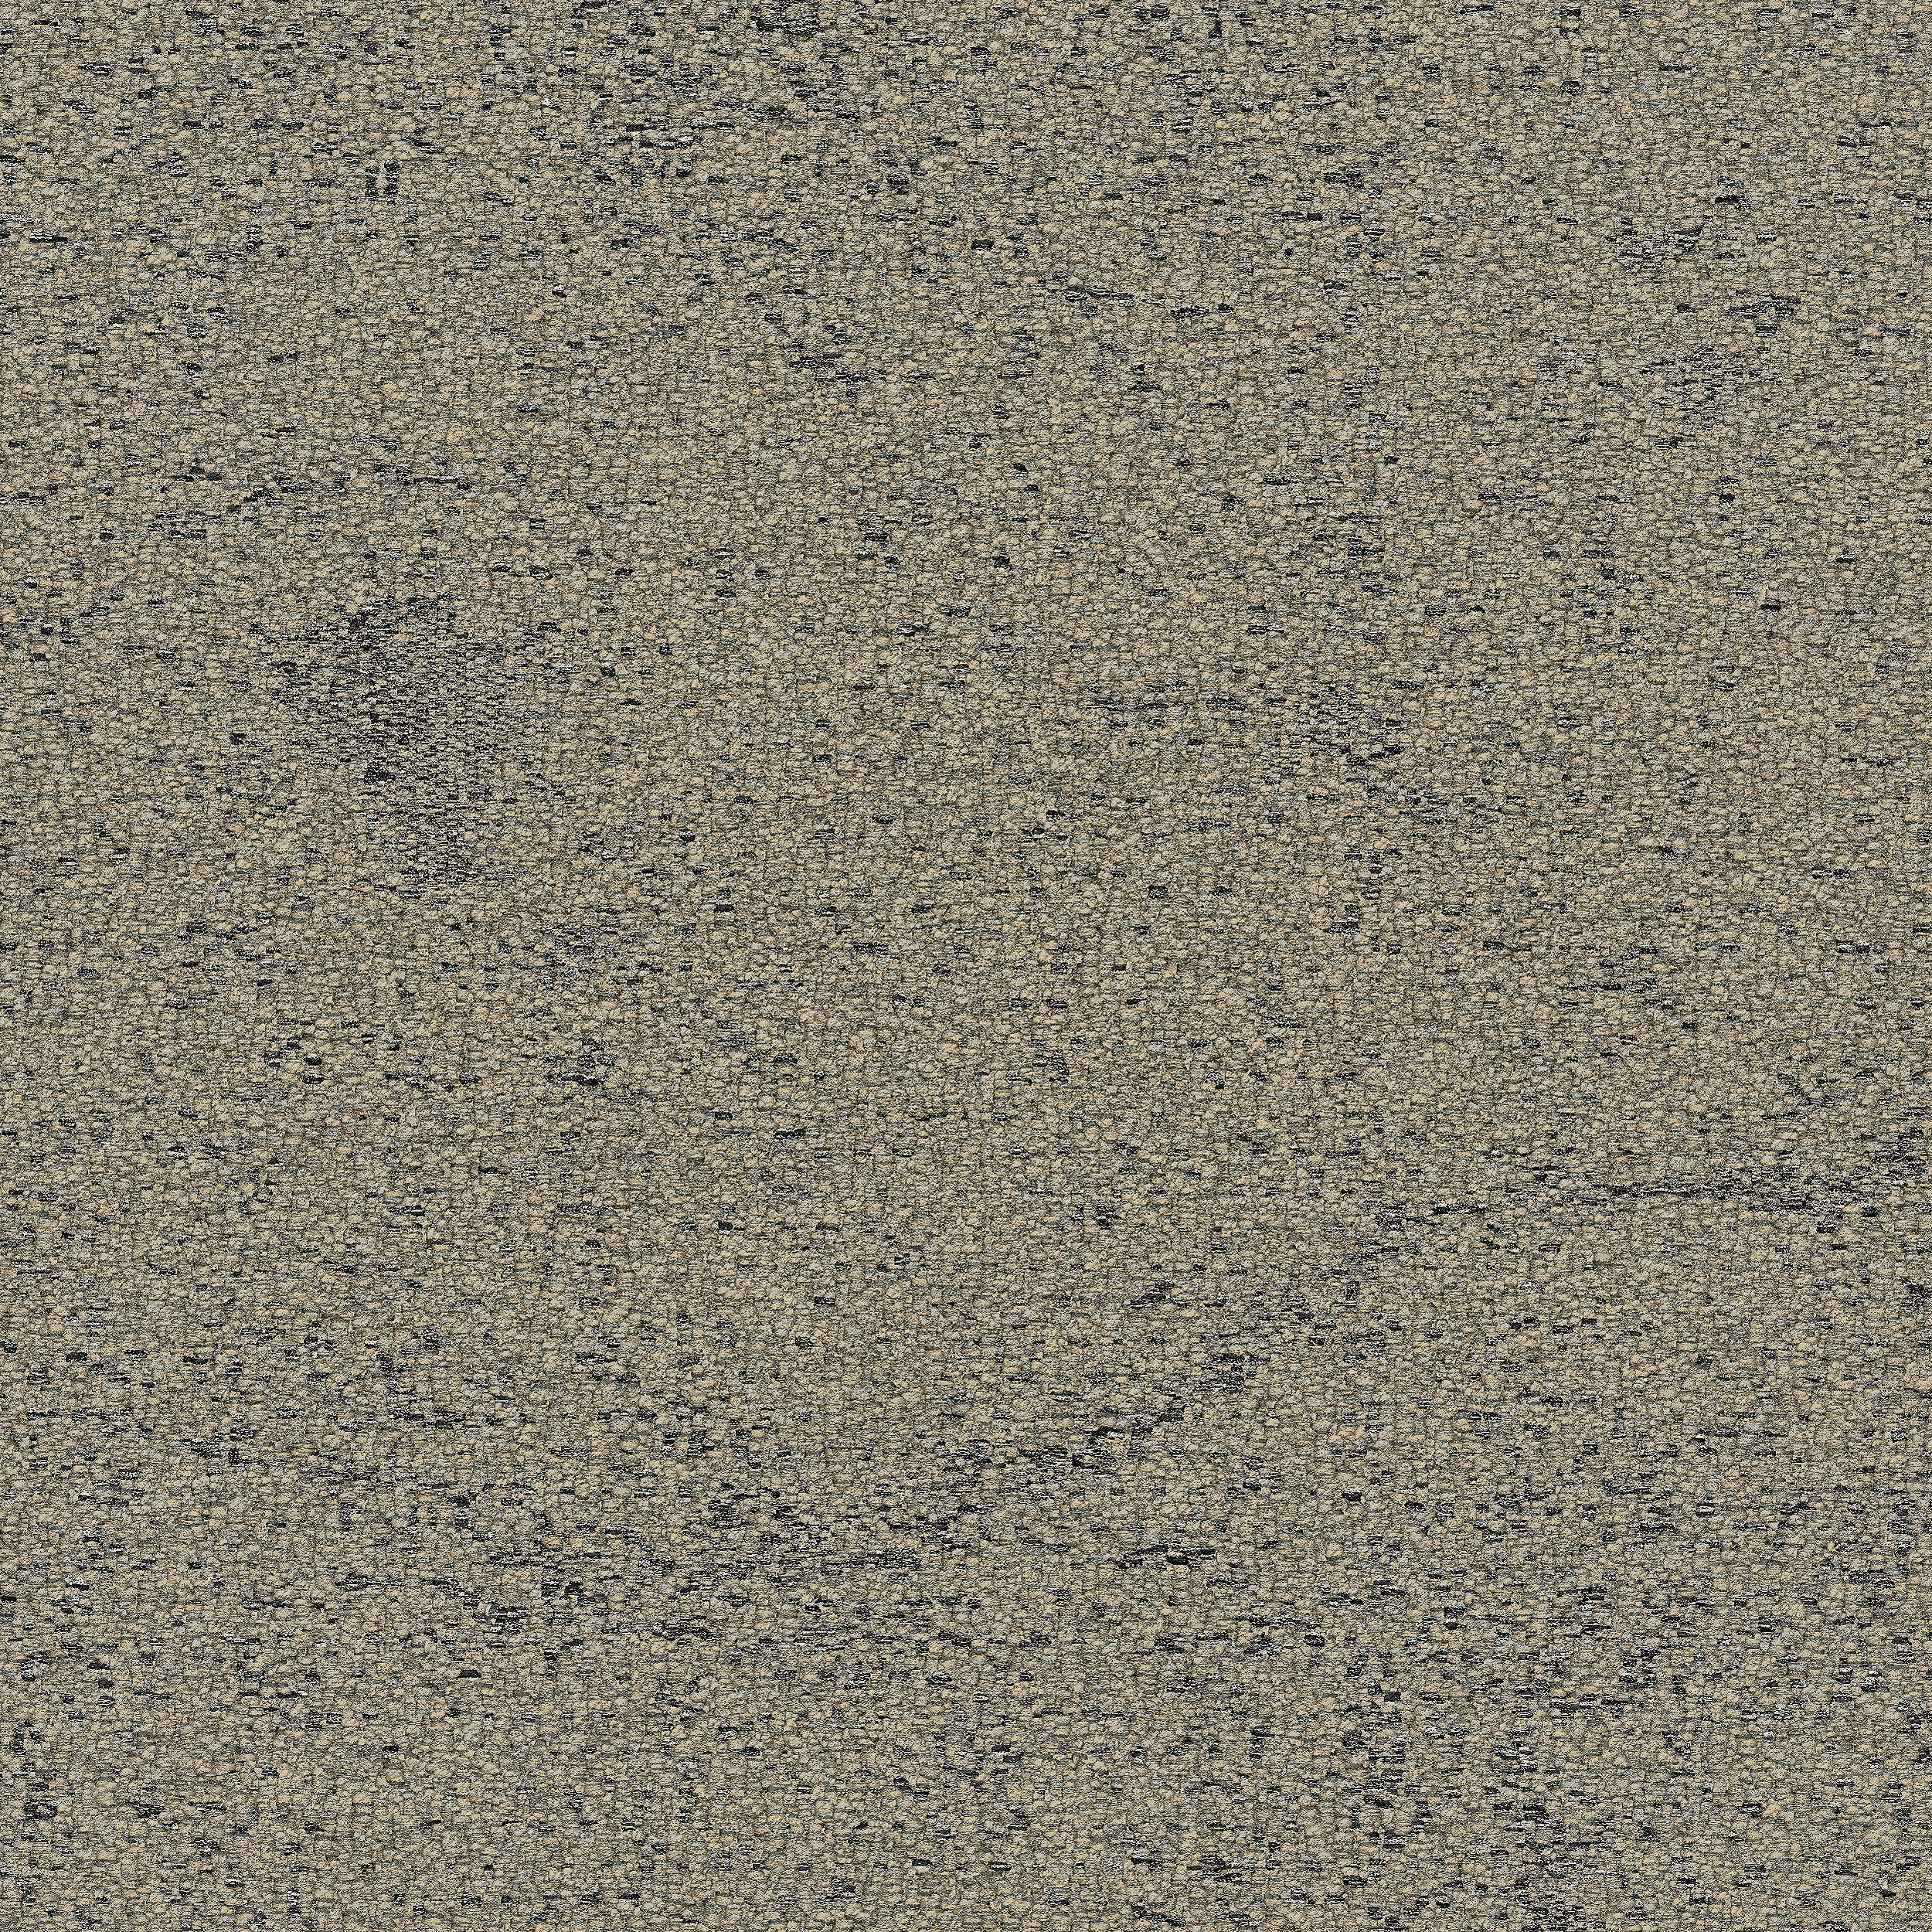 DL905 Carpet Tile In Graphite imagen número 3